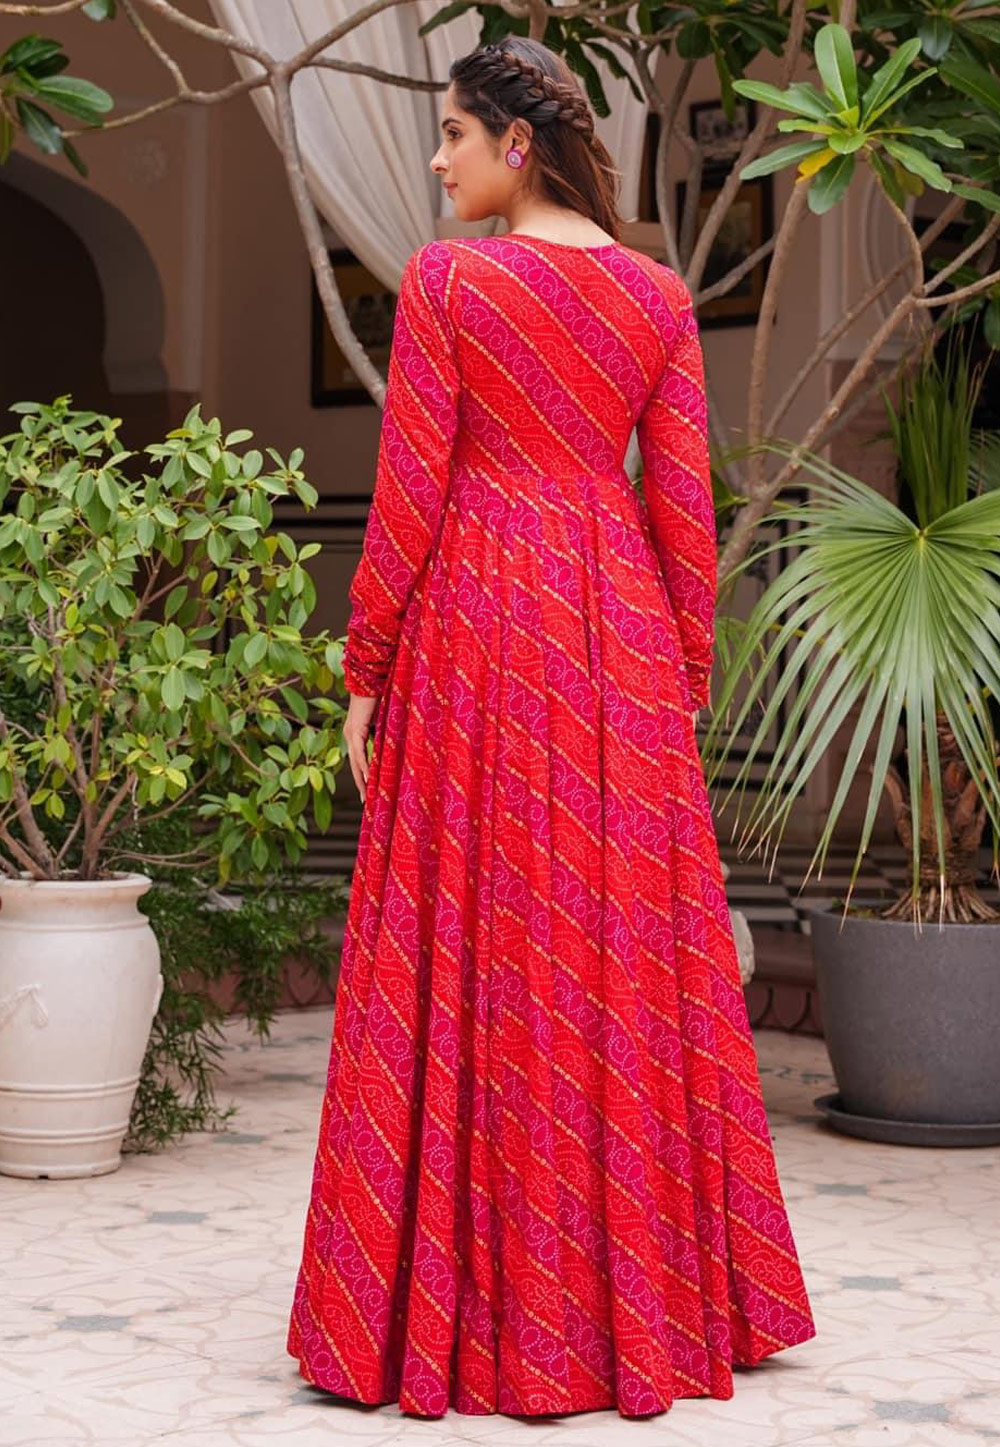 Artistic Red Designer Indo-Western Lehenga Choli for Sangeet or Wedding